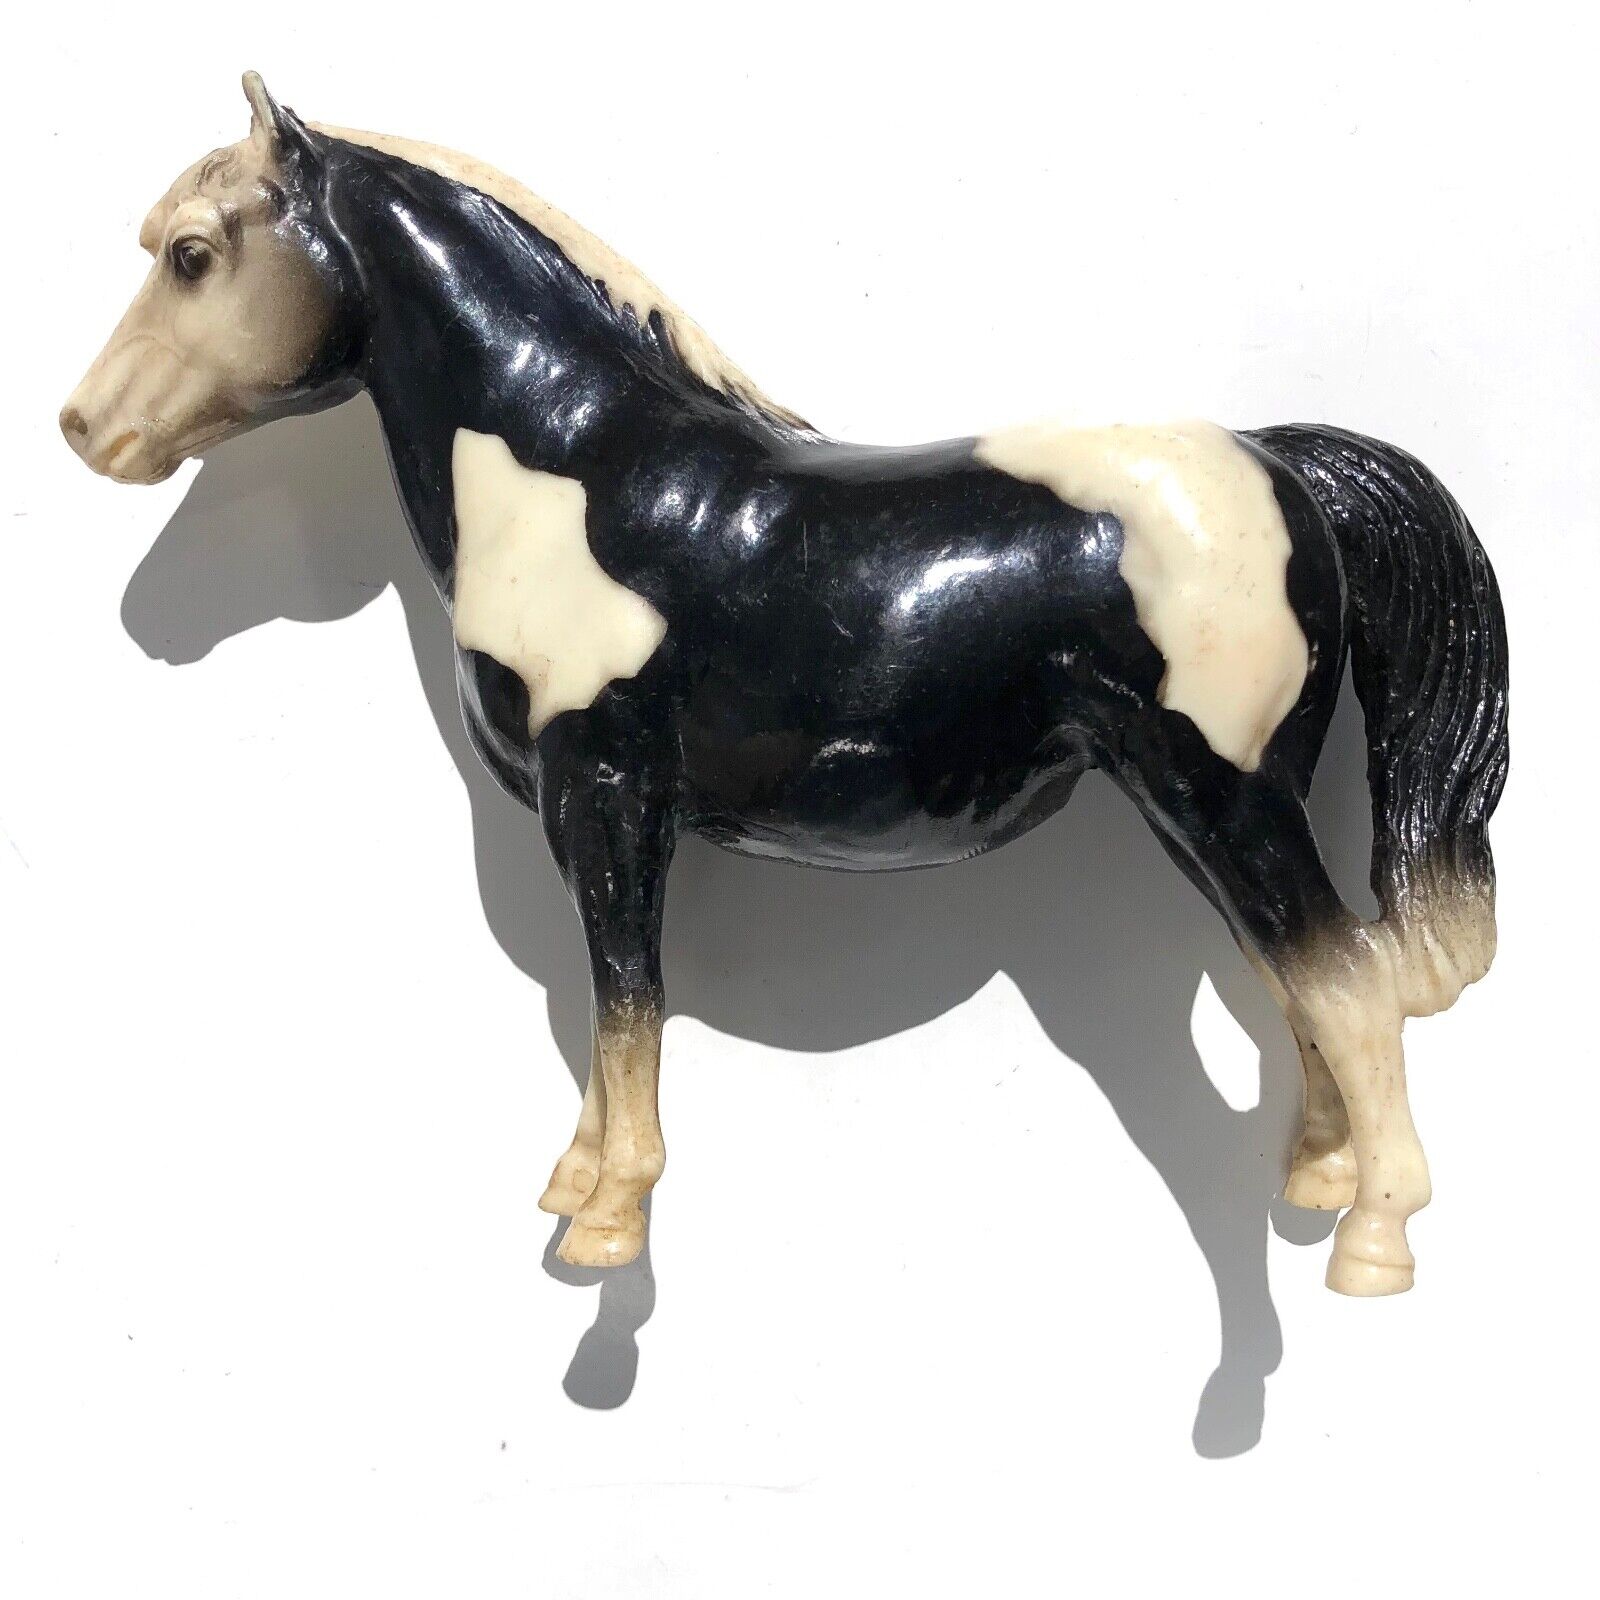 Vintage Breyer Shetland Pony #21 Black And White Breyer Molding Co. Pre-owned